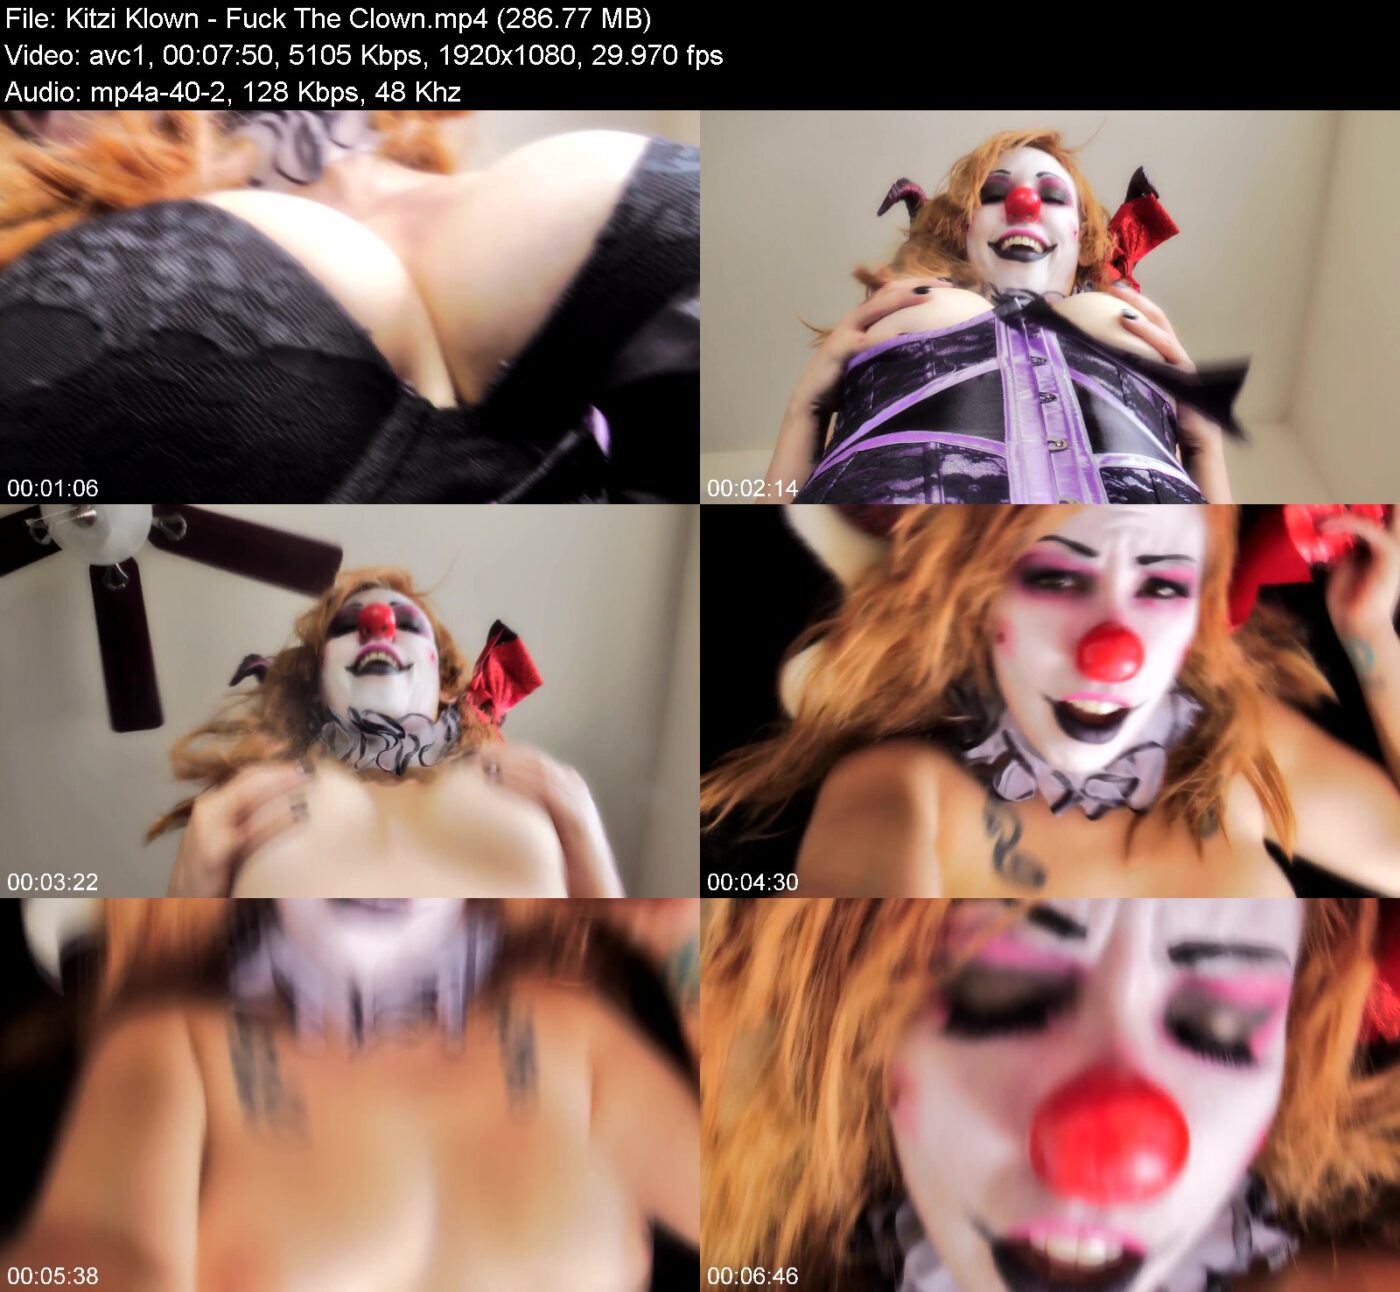 Kitzi Klown - Fuck The Clown